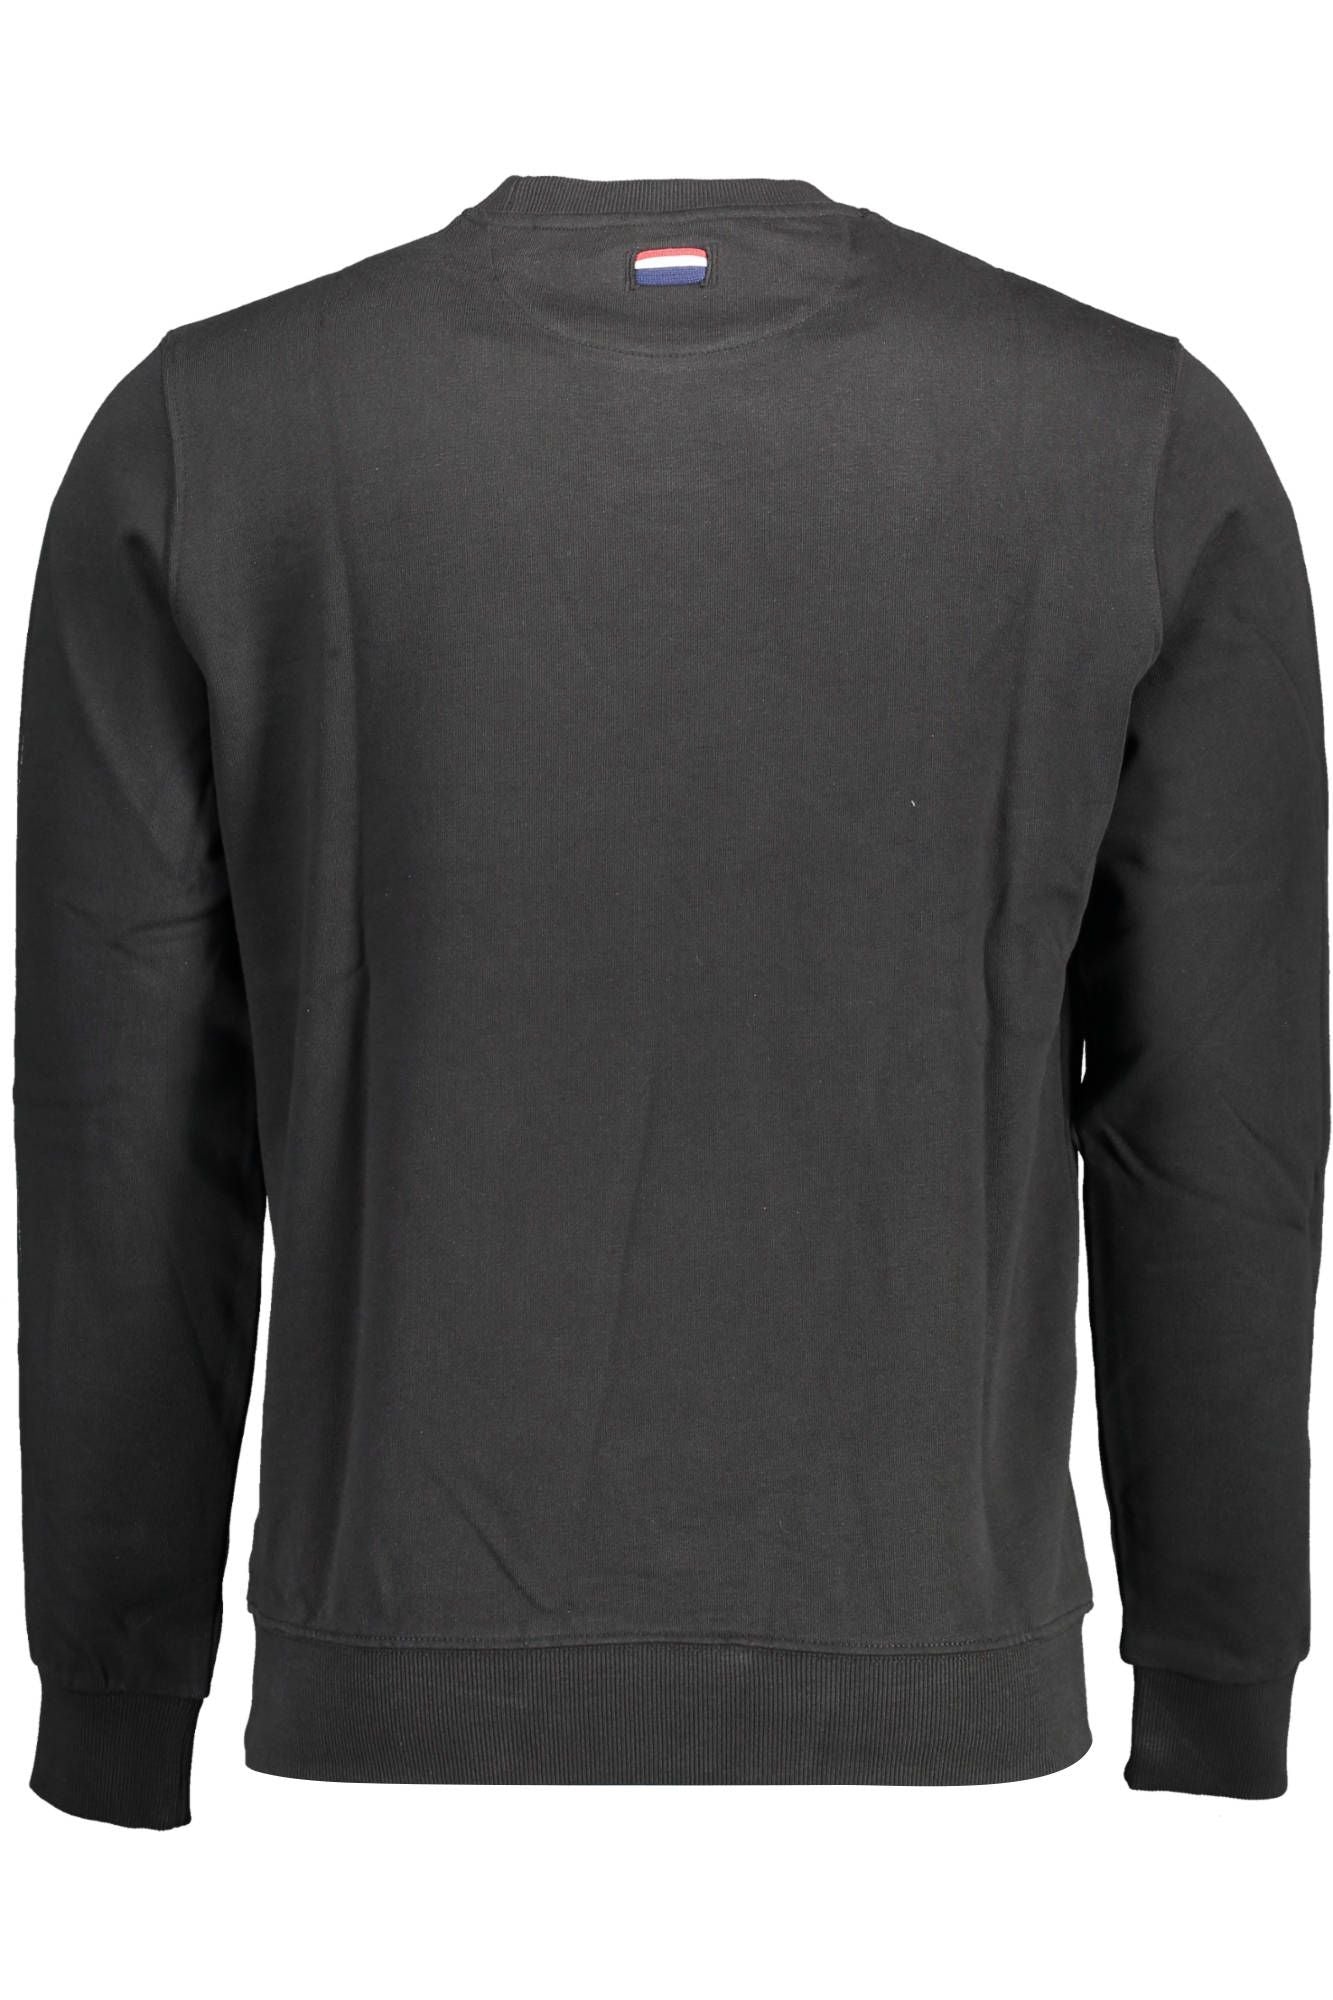 Elegant Long-Sleeved Embroidered Black Sweatshirt